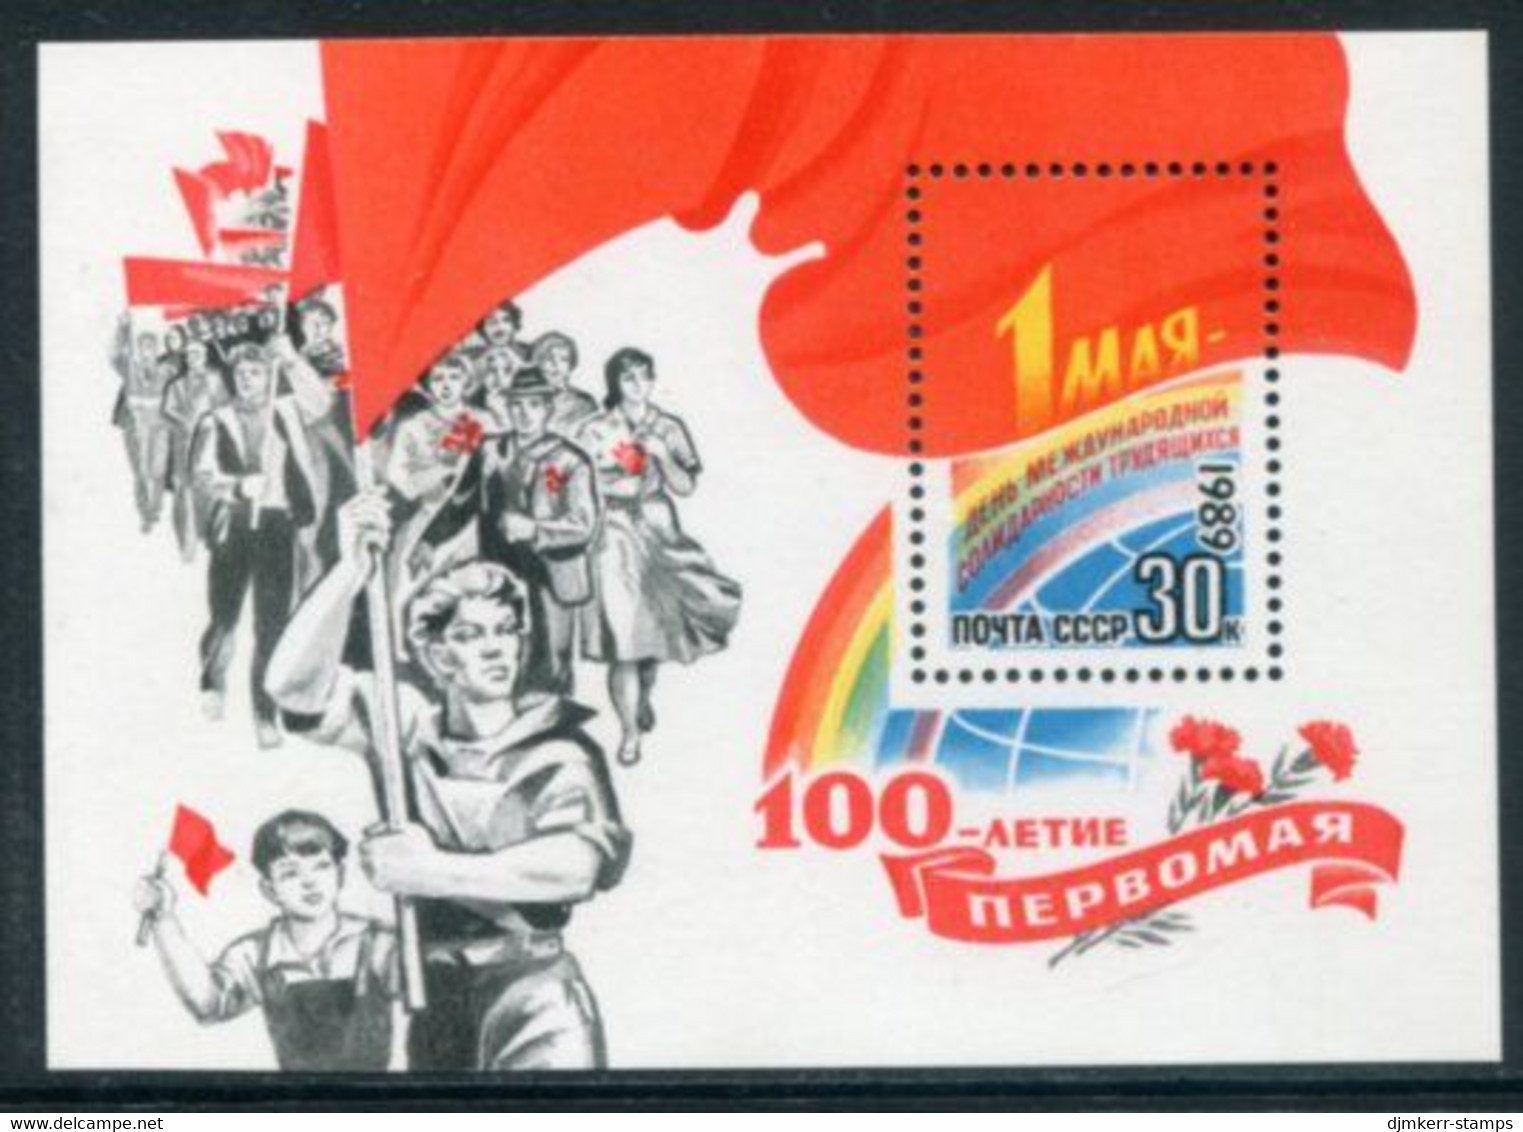 SOVIET UNION 1989 Centenary Of Labour Day Block MNH / **.  Michel Block 206 - Blocks & Kleinbögen